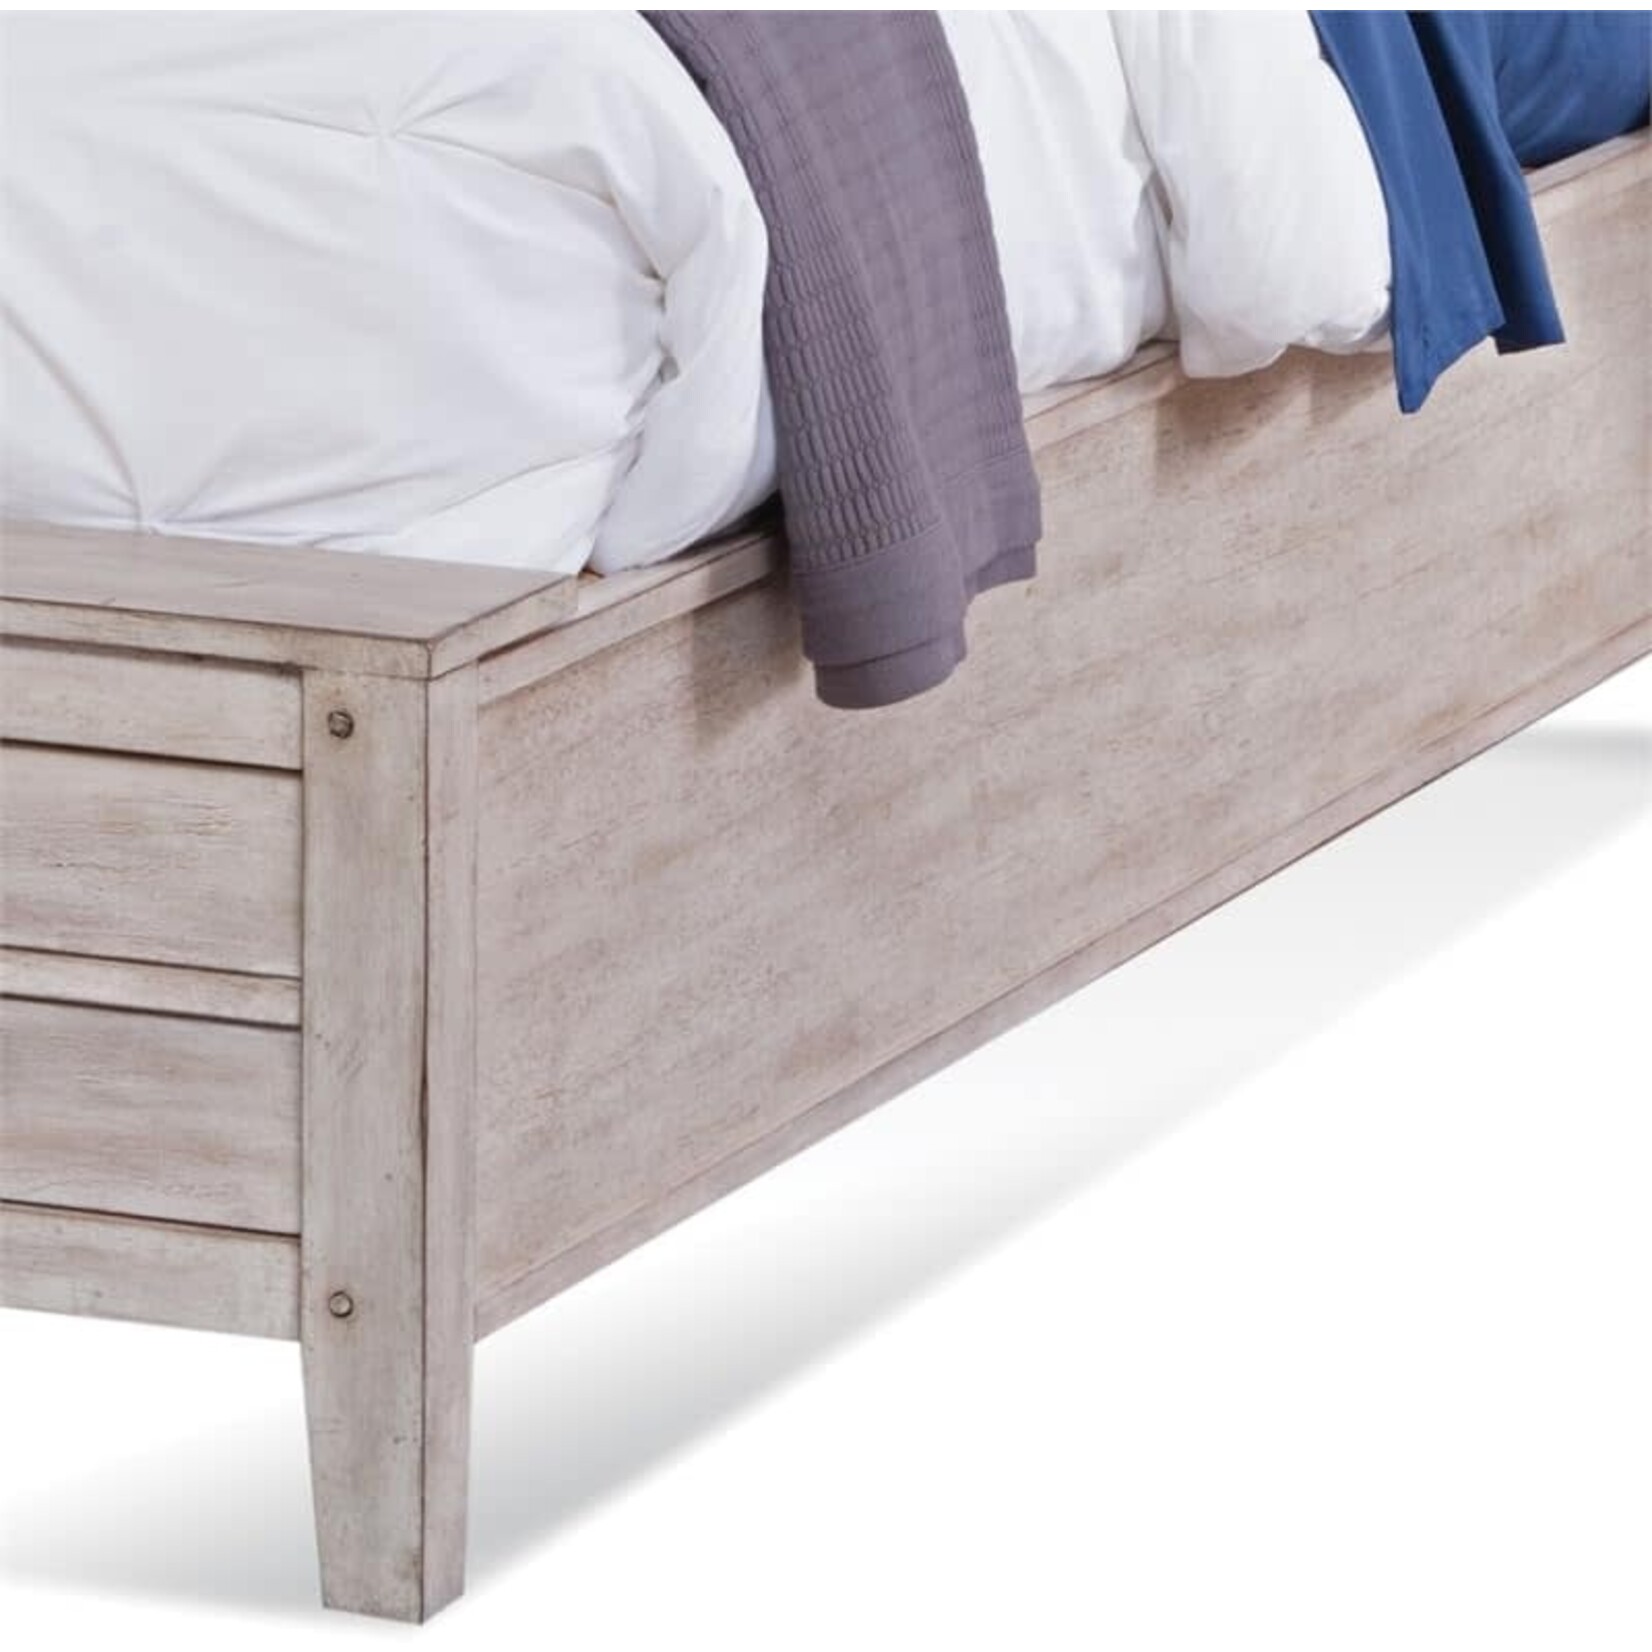 American Woodcrafters Aurora White Wash King Panel Bed w/Storage